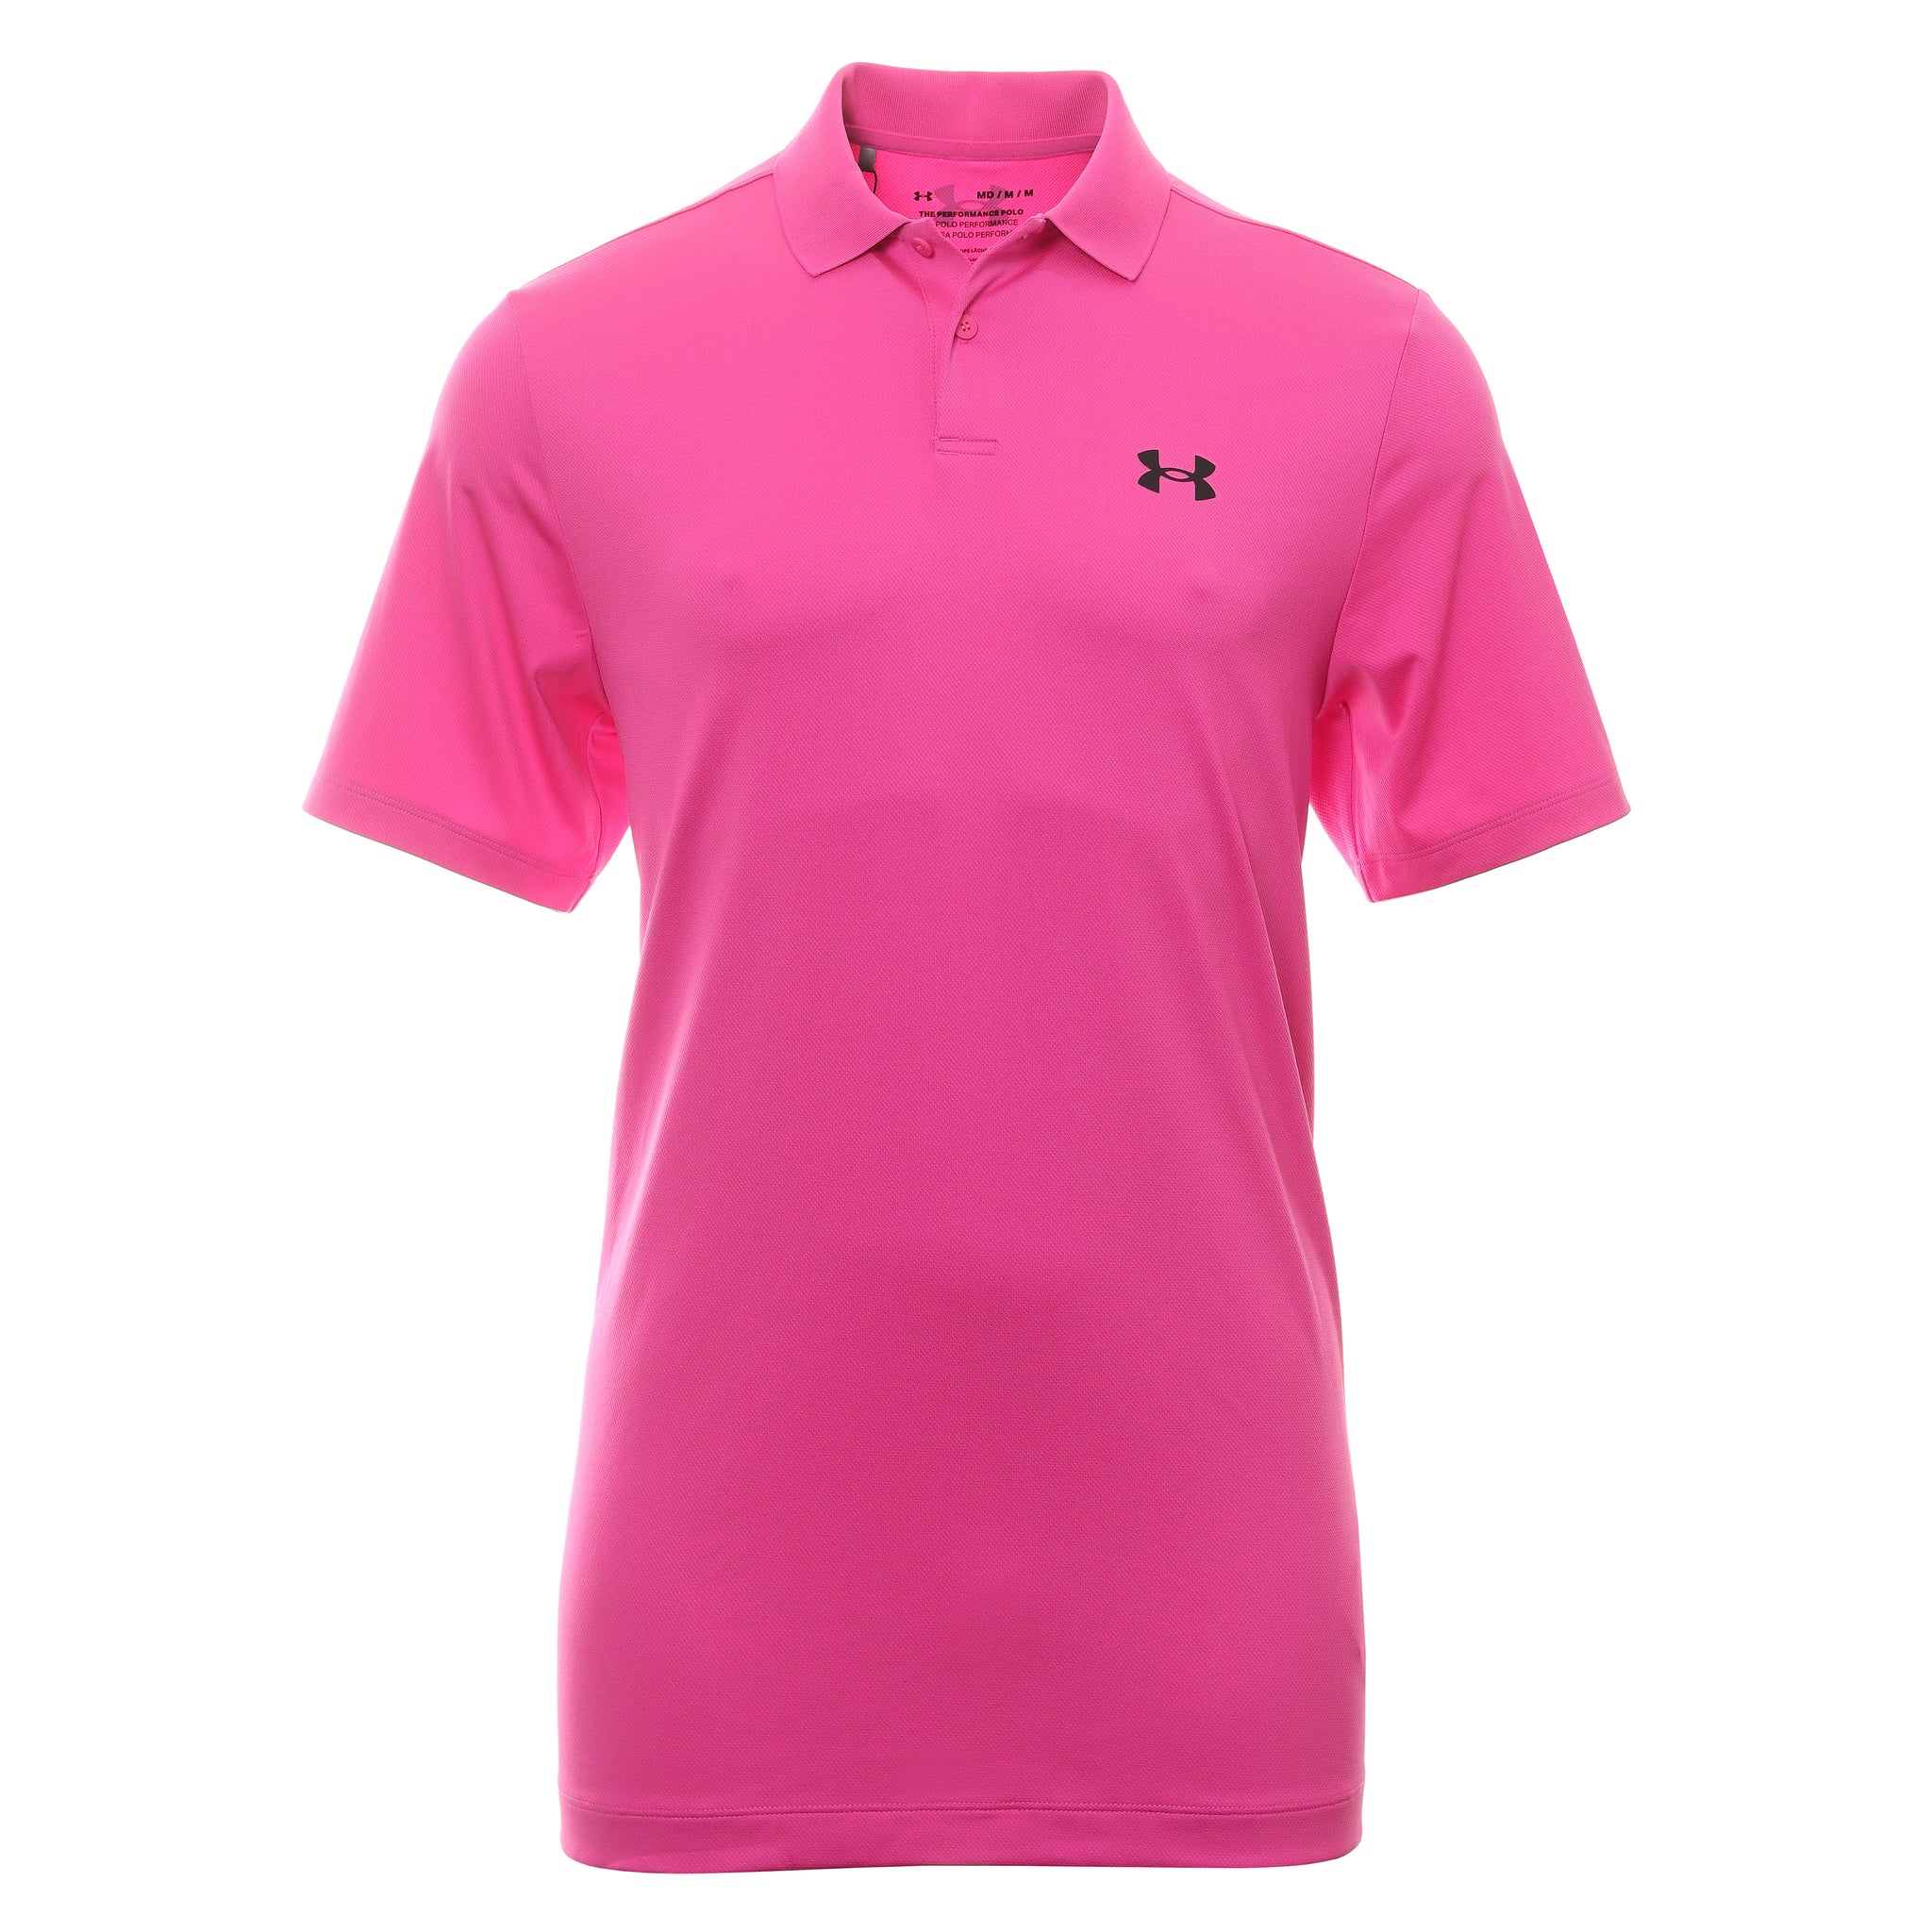 Under Armour Golf 3.0 Shirt 1377374 Rebel Pink | Restrictedgs